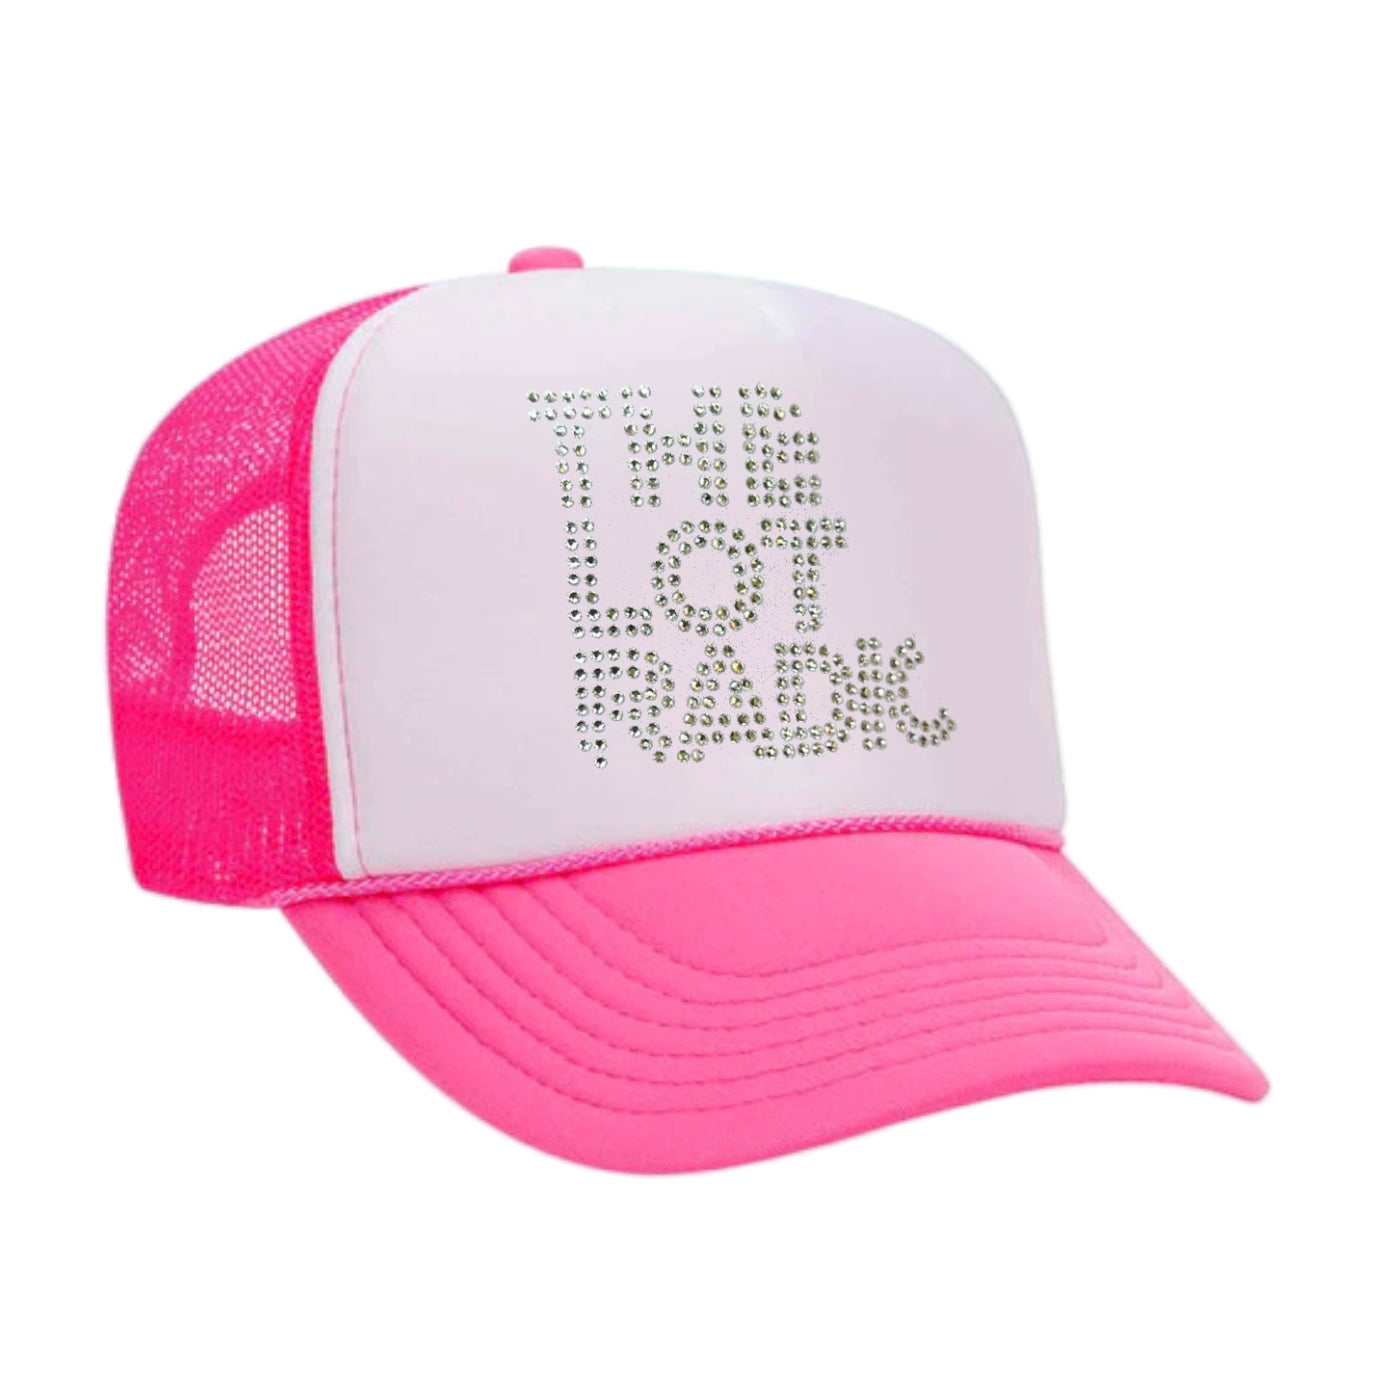 Pride Fundraiser Limited Edition Trucker Hat